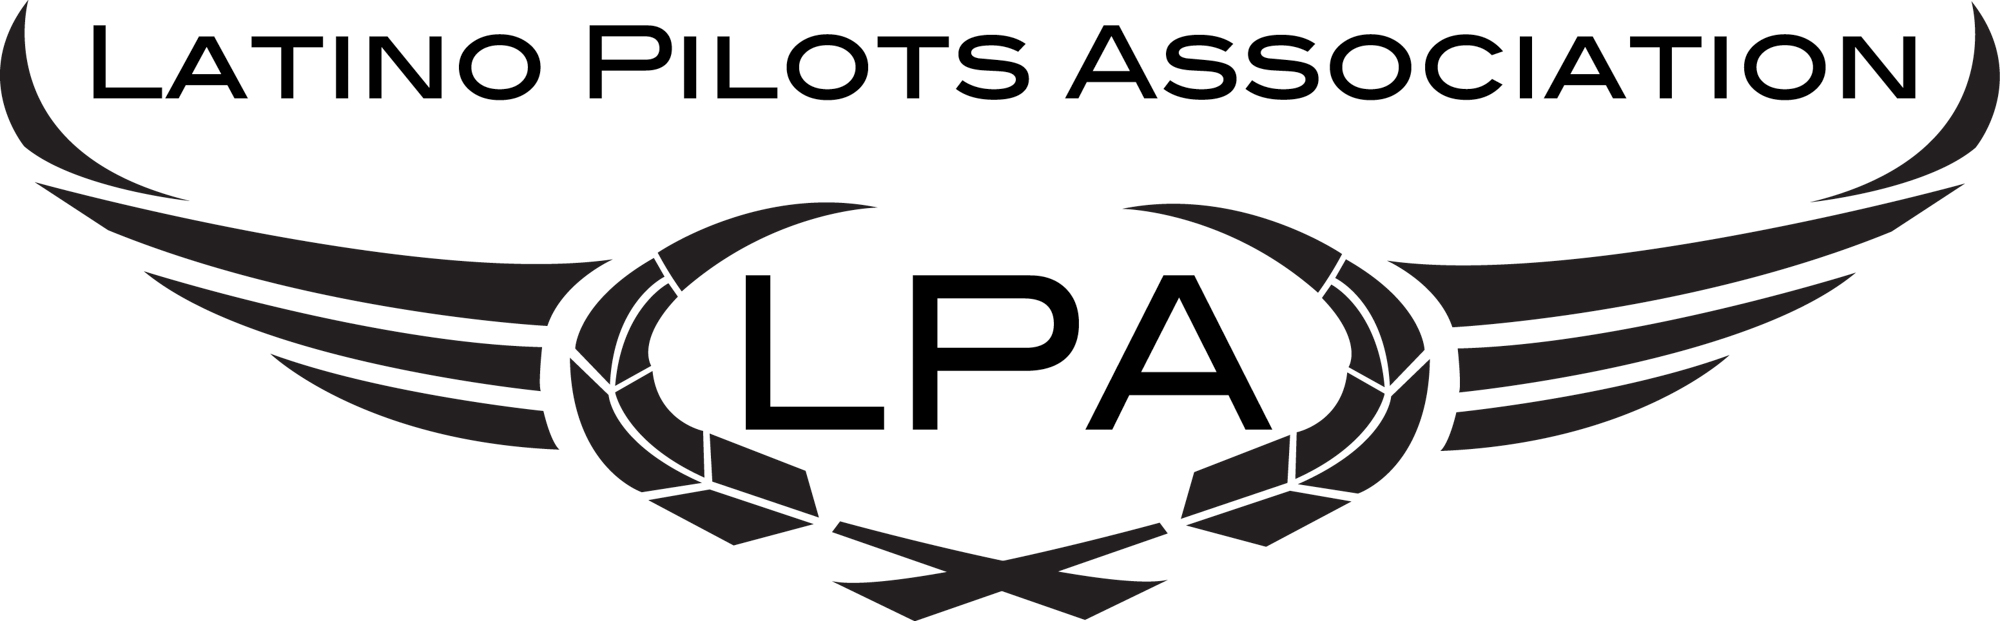 Meet the Latino Pilots Association and Camila Aero Crew News